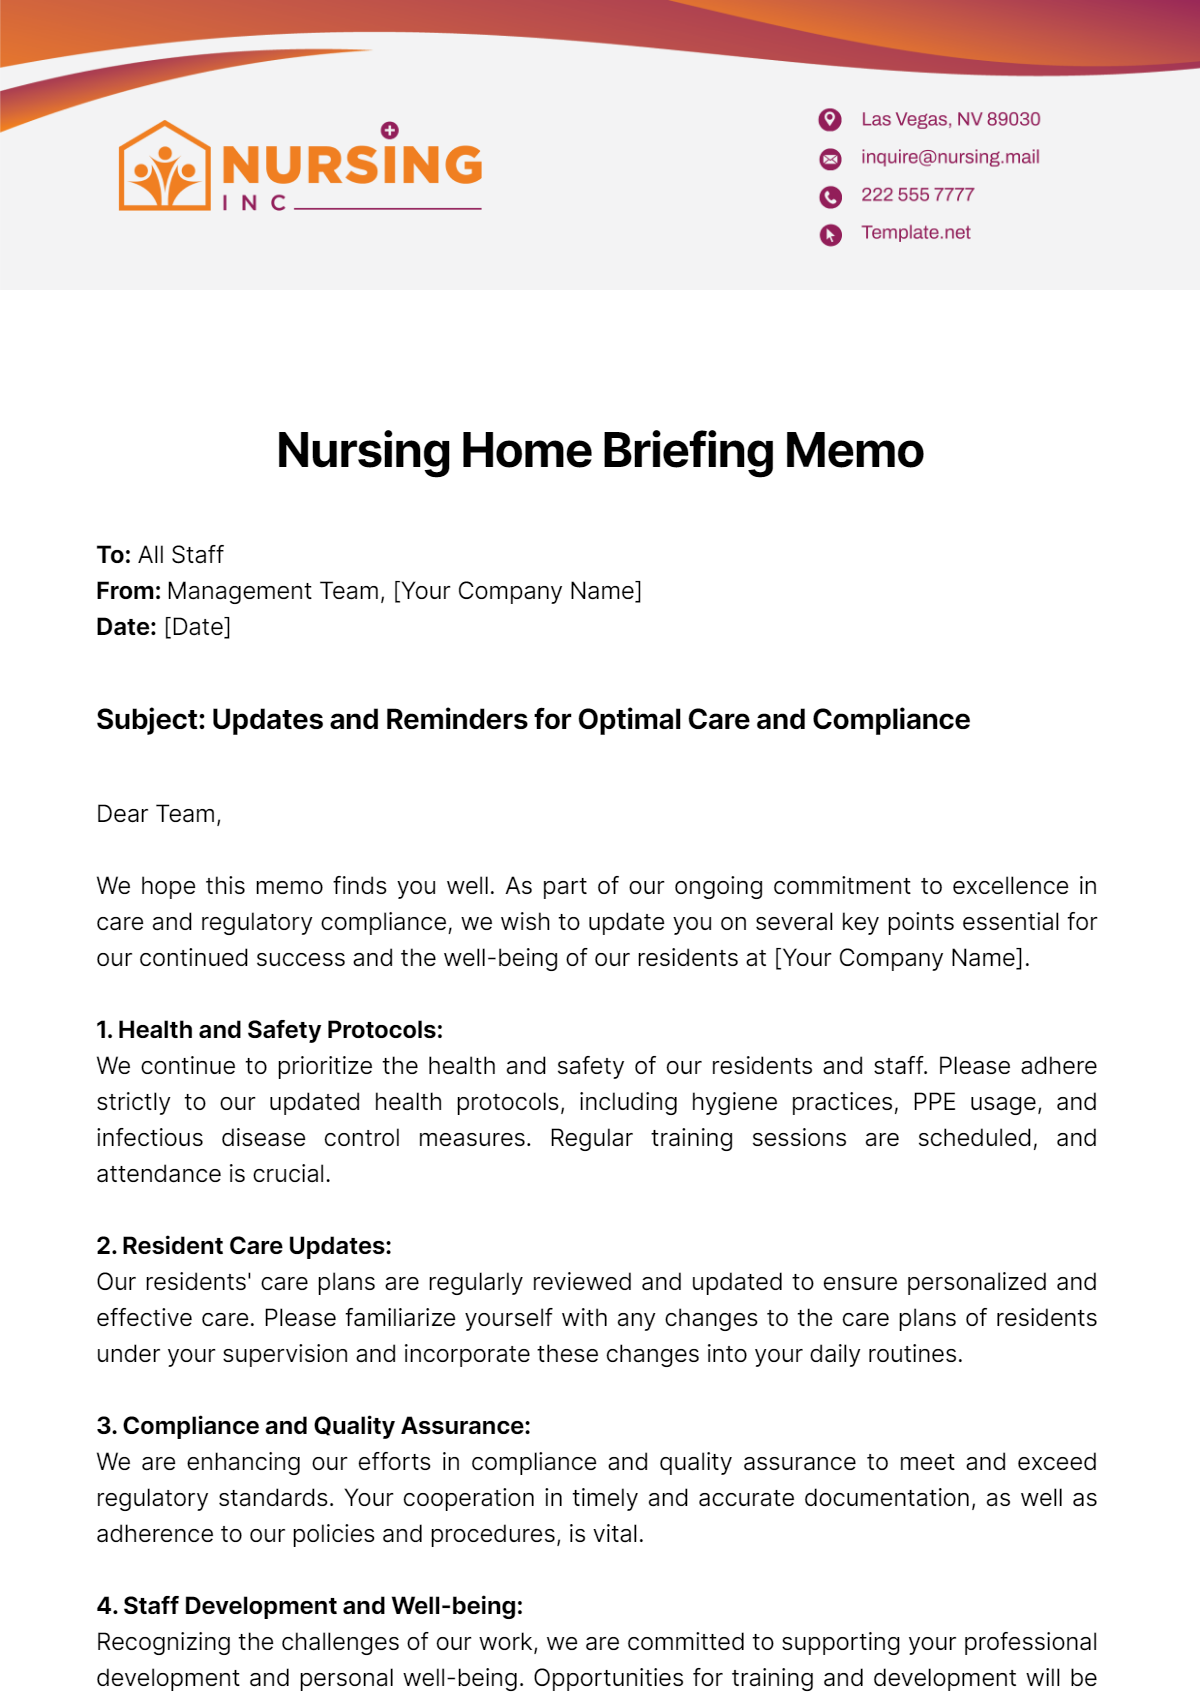 Nursing Home Briefing Memo Template